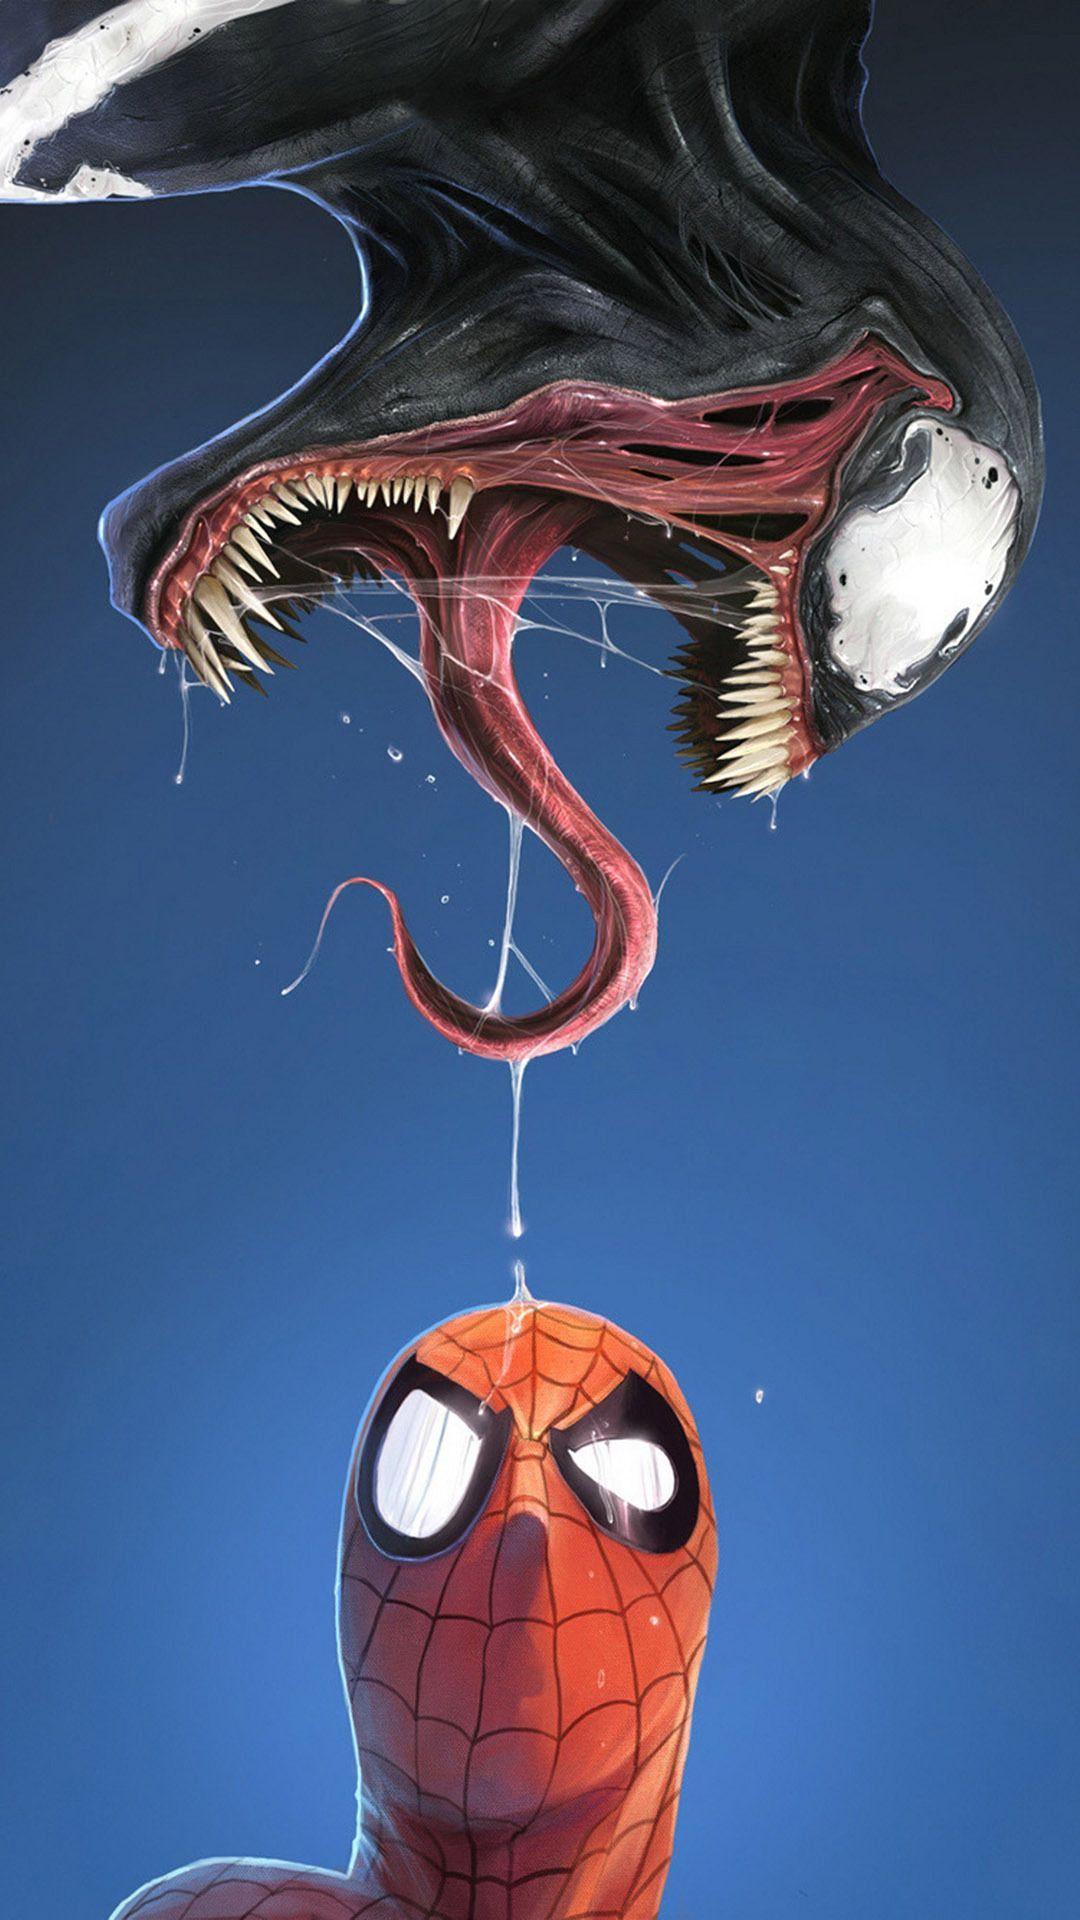 Spider-Man and Venom Wallpapers - Top Free Spider-Man and Venom